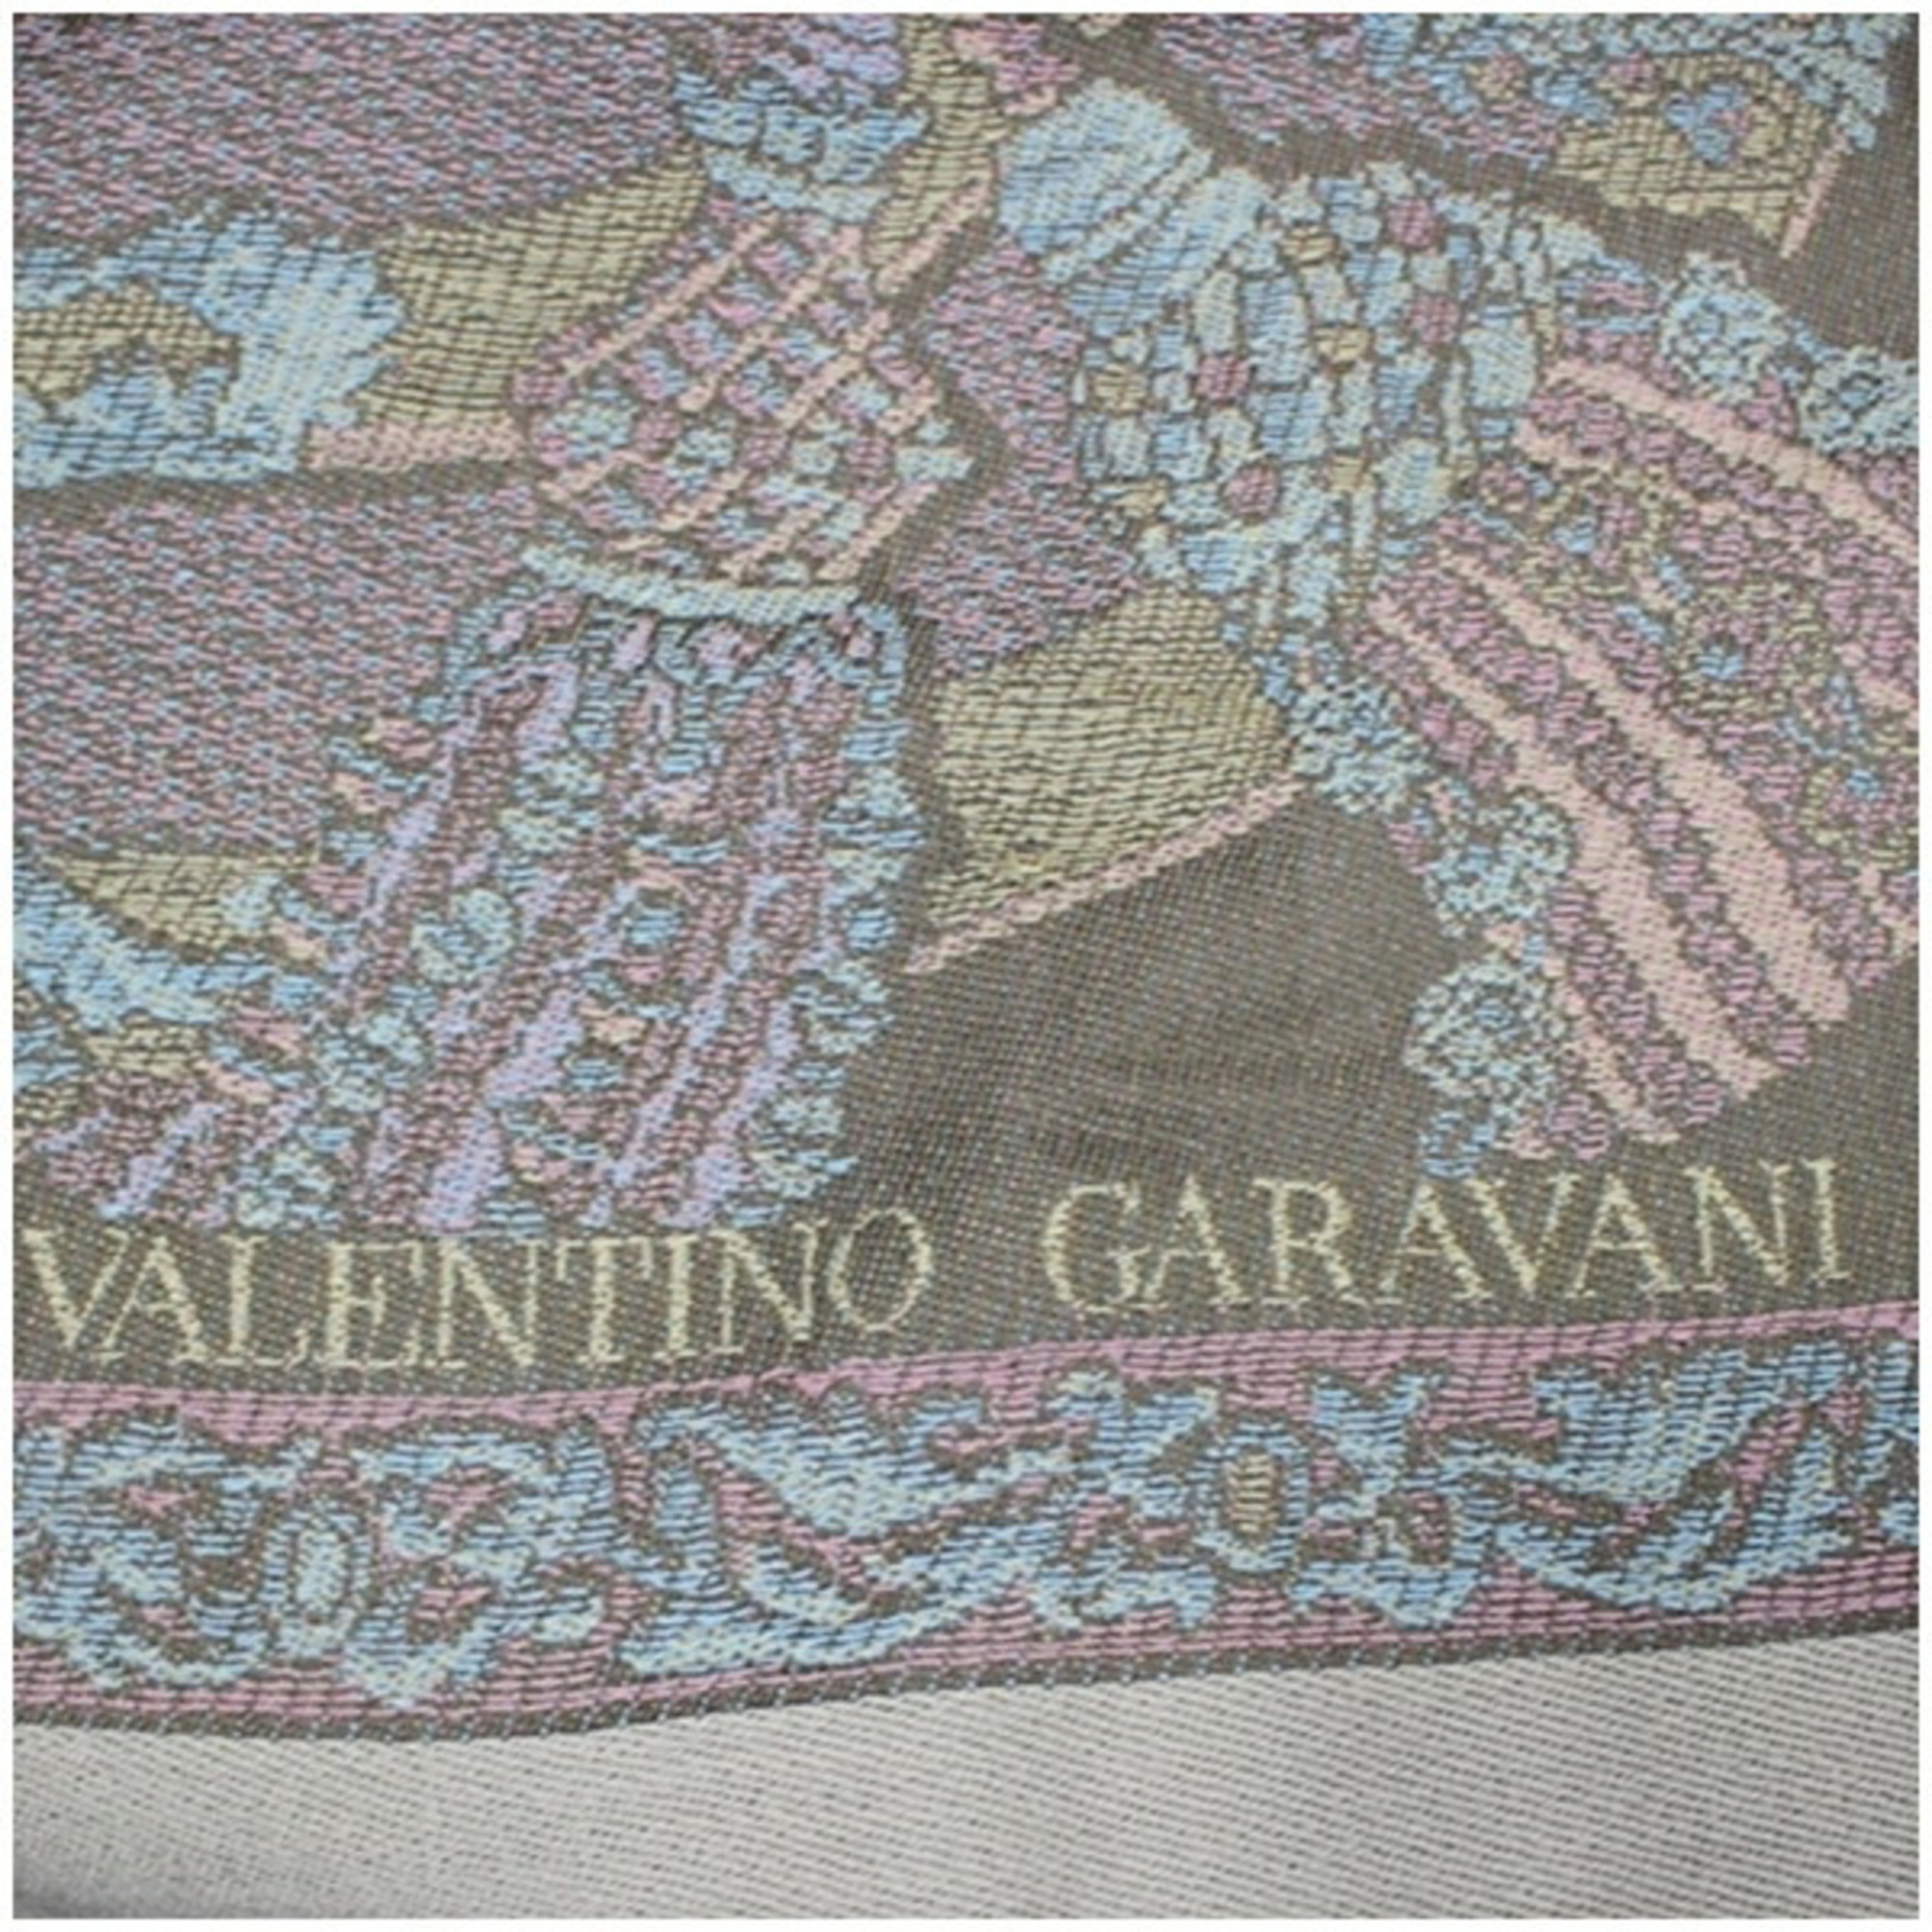 VALENTINO GARAVANI Large Stole Shawl Throw Brown Ladies Valentino